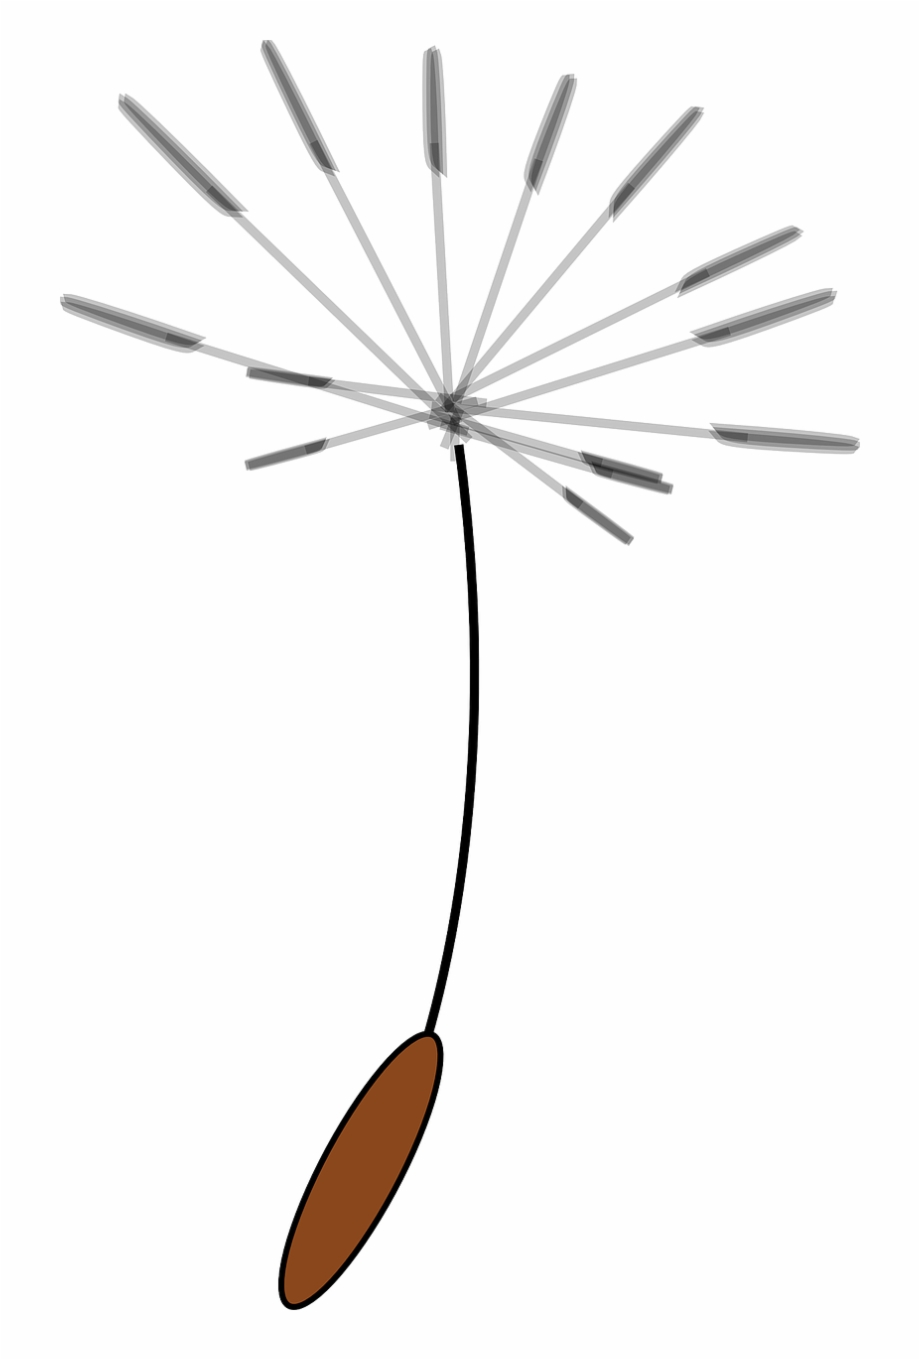 dandelion clipart seed dispersal